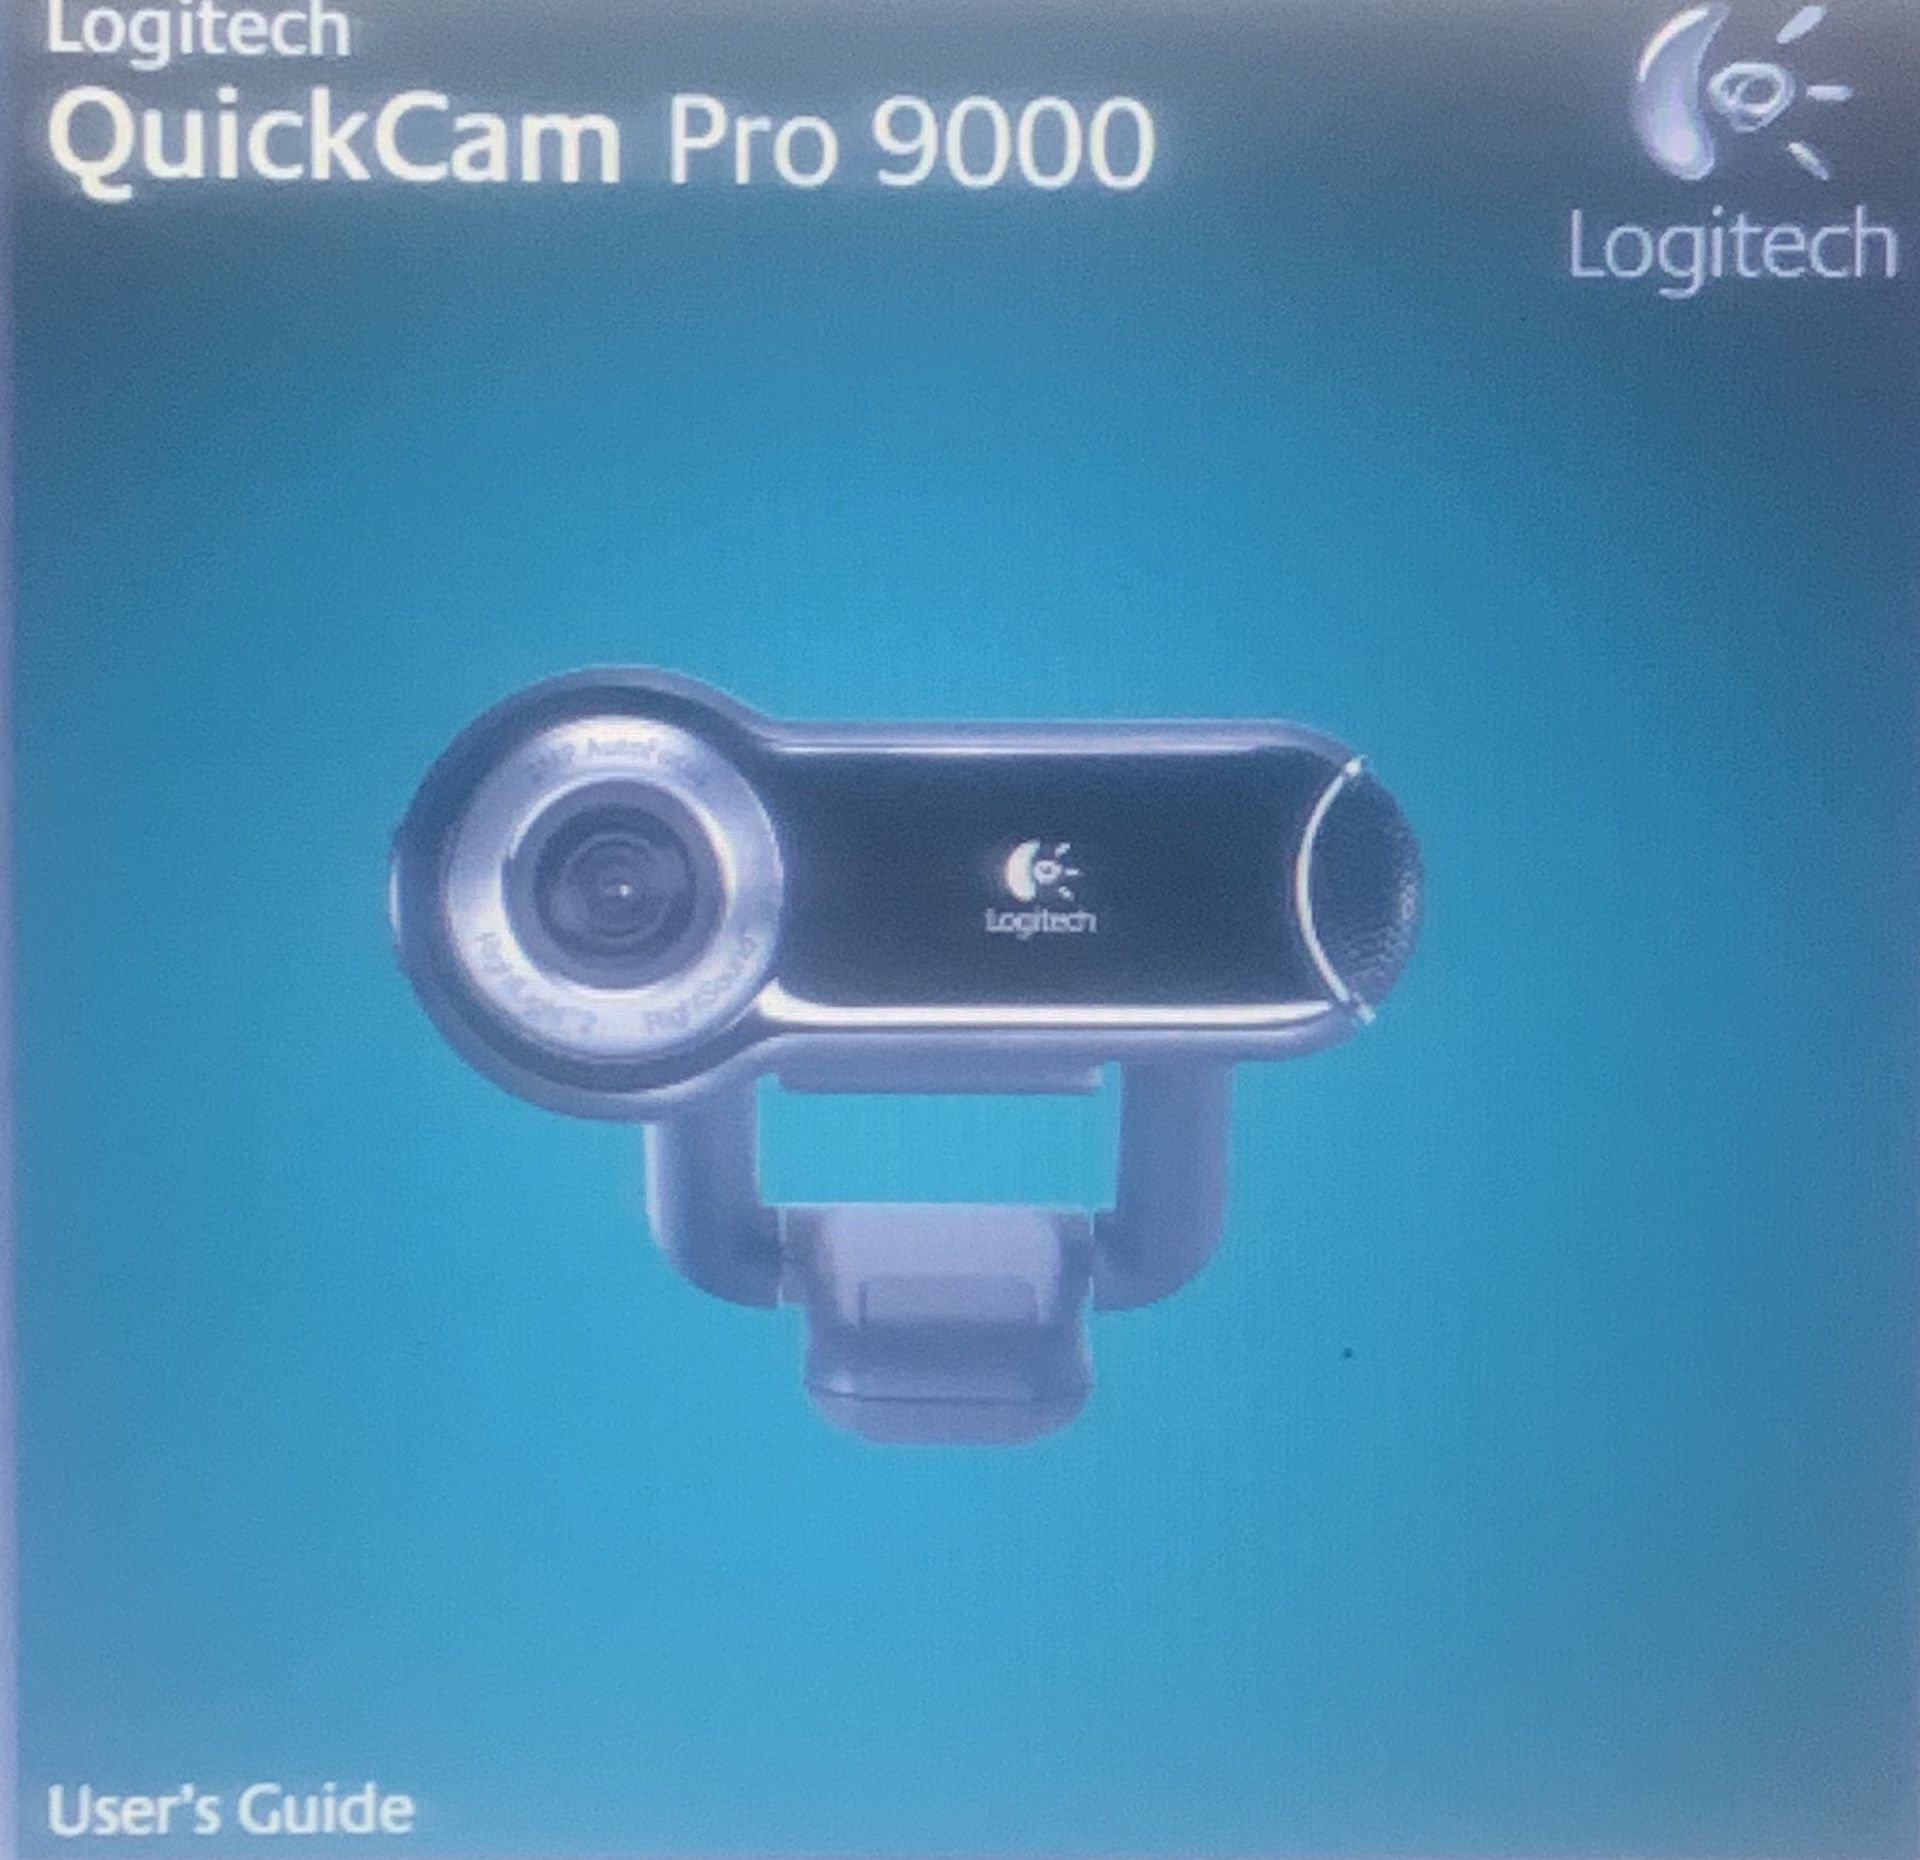 Verdensvindue lejlighed Vedholdende Dukane document/Logitech quickcam pro 9000 camera for Sale in Watauga, TX -  OfferUp